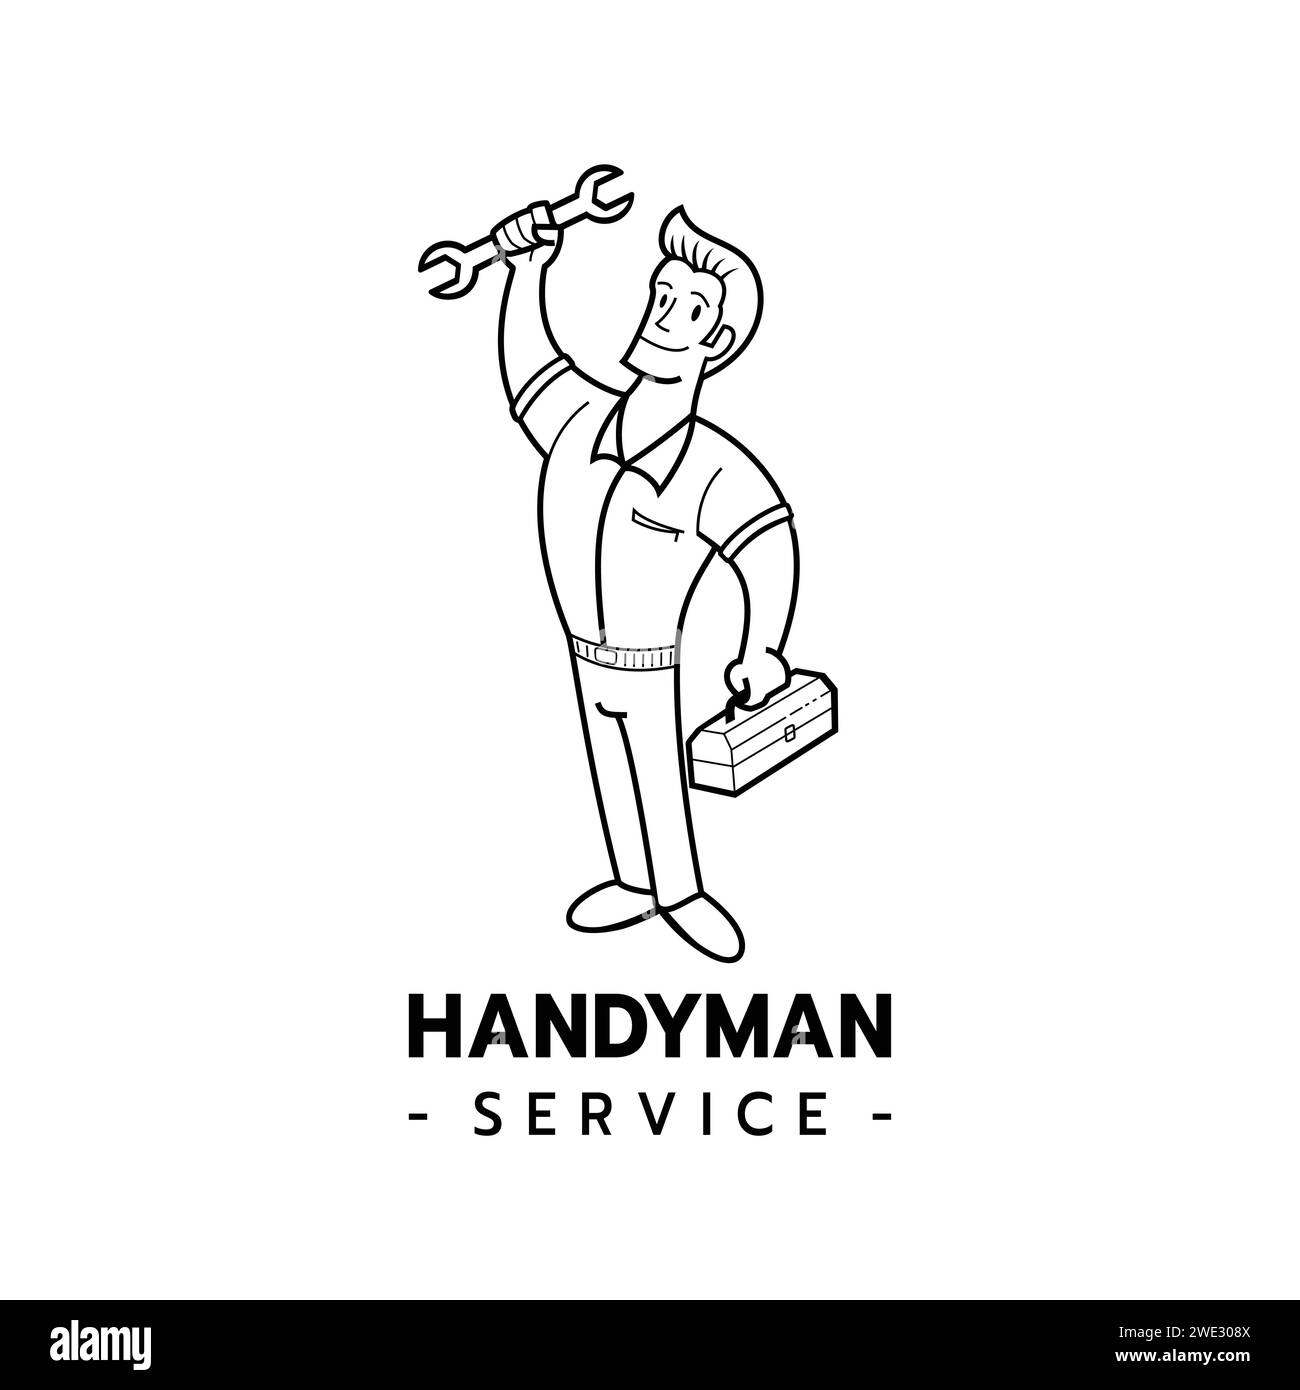 Mechanic Man Logo, Handyman for Service, Repairman or Maintenance Mascot Concept Cartoon Character Design Isolated on White Background Vector Illustra Stock Vector